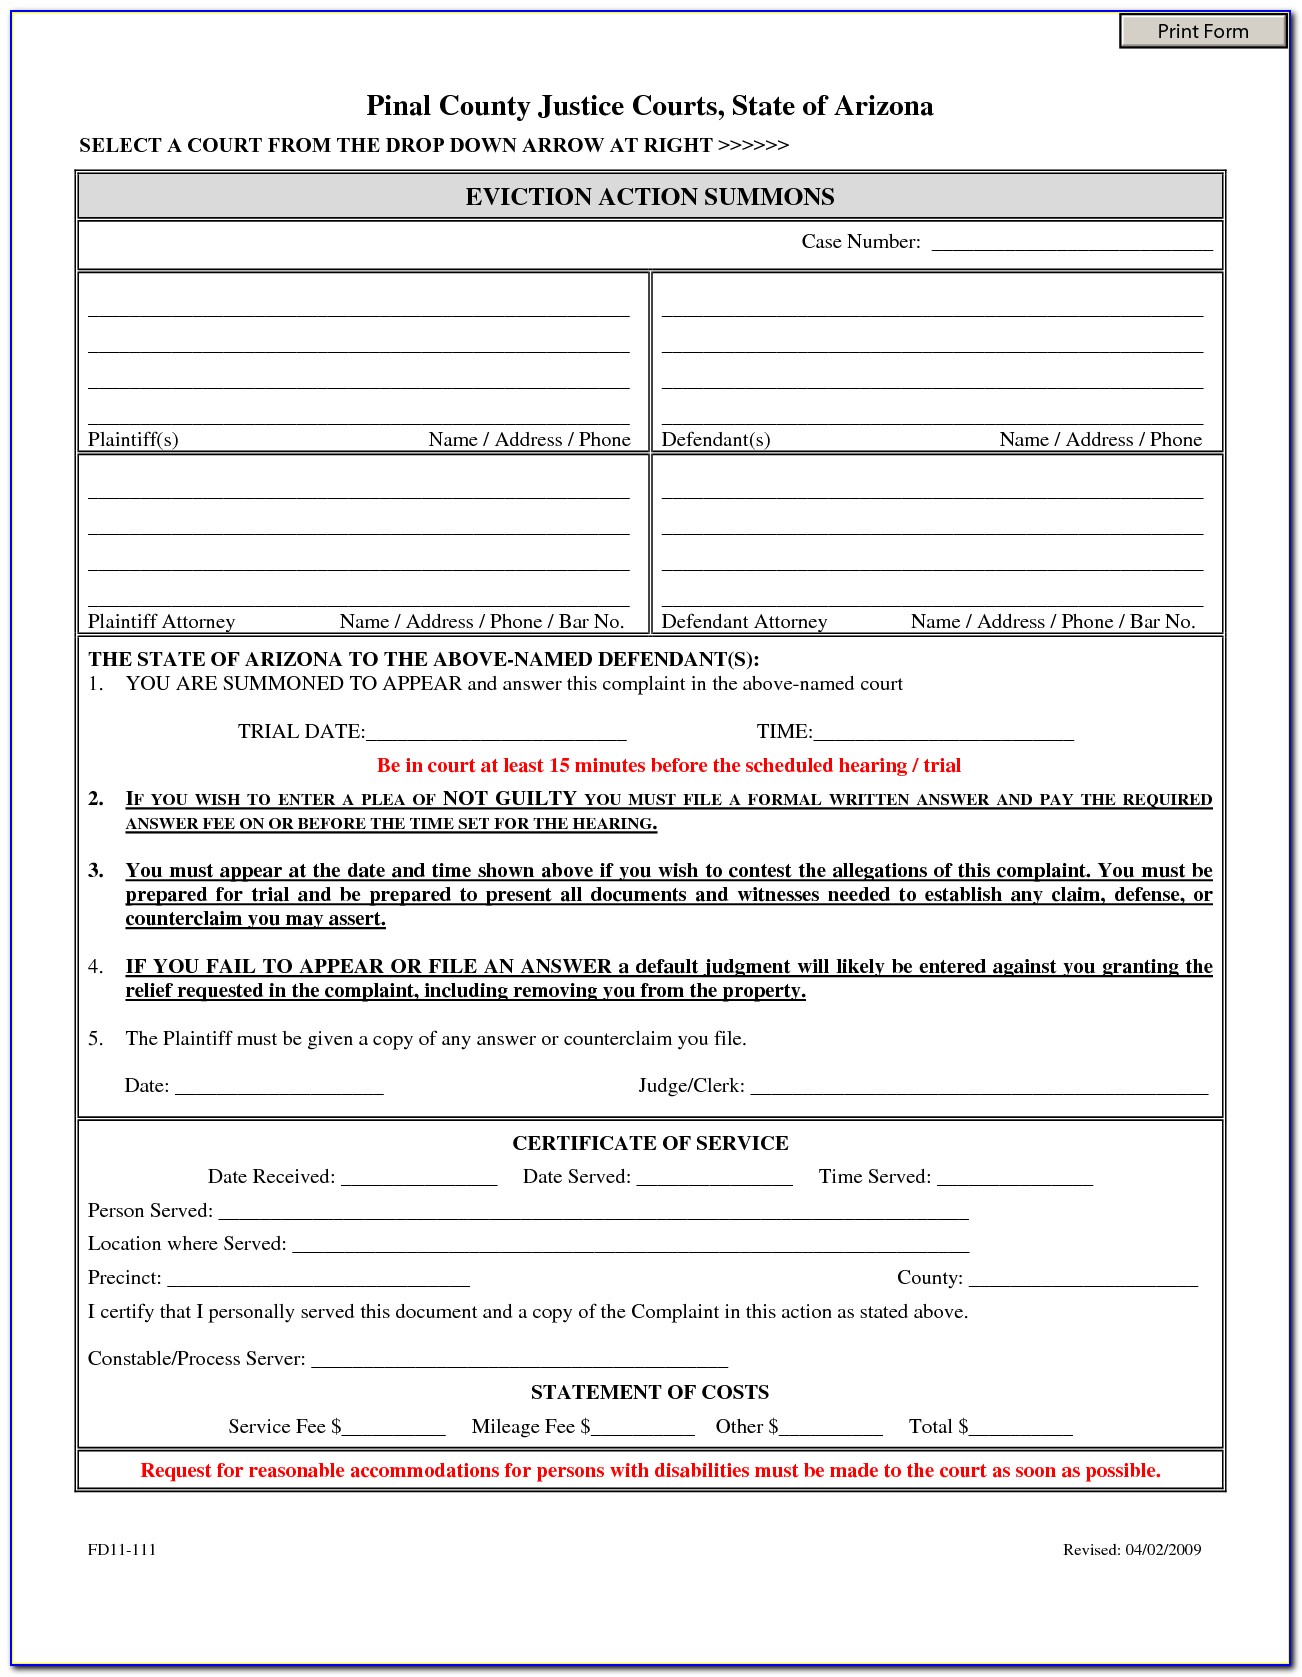 Arizona Eviction Notice Form